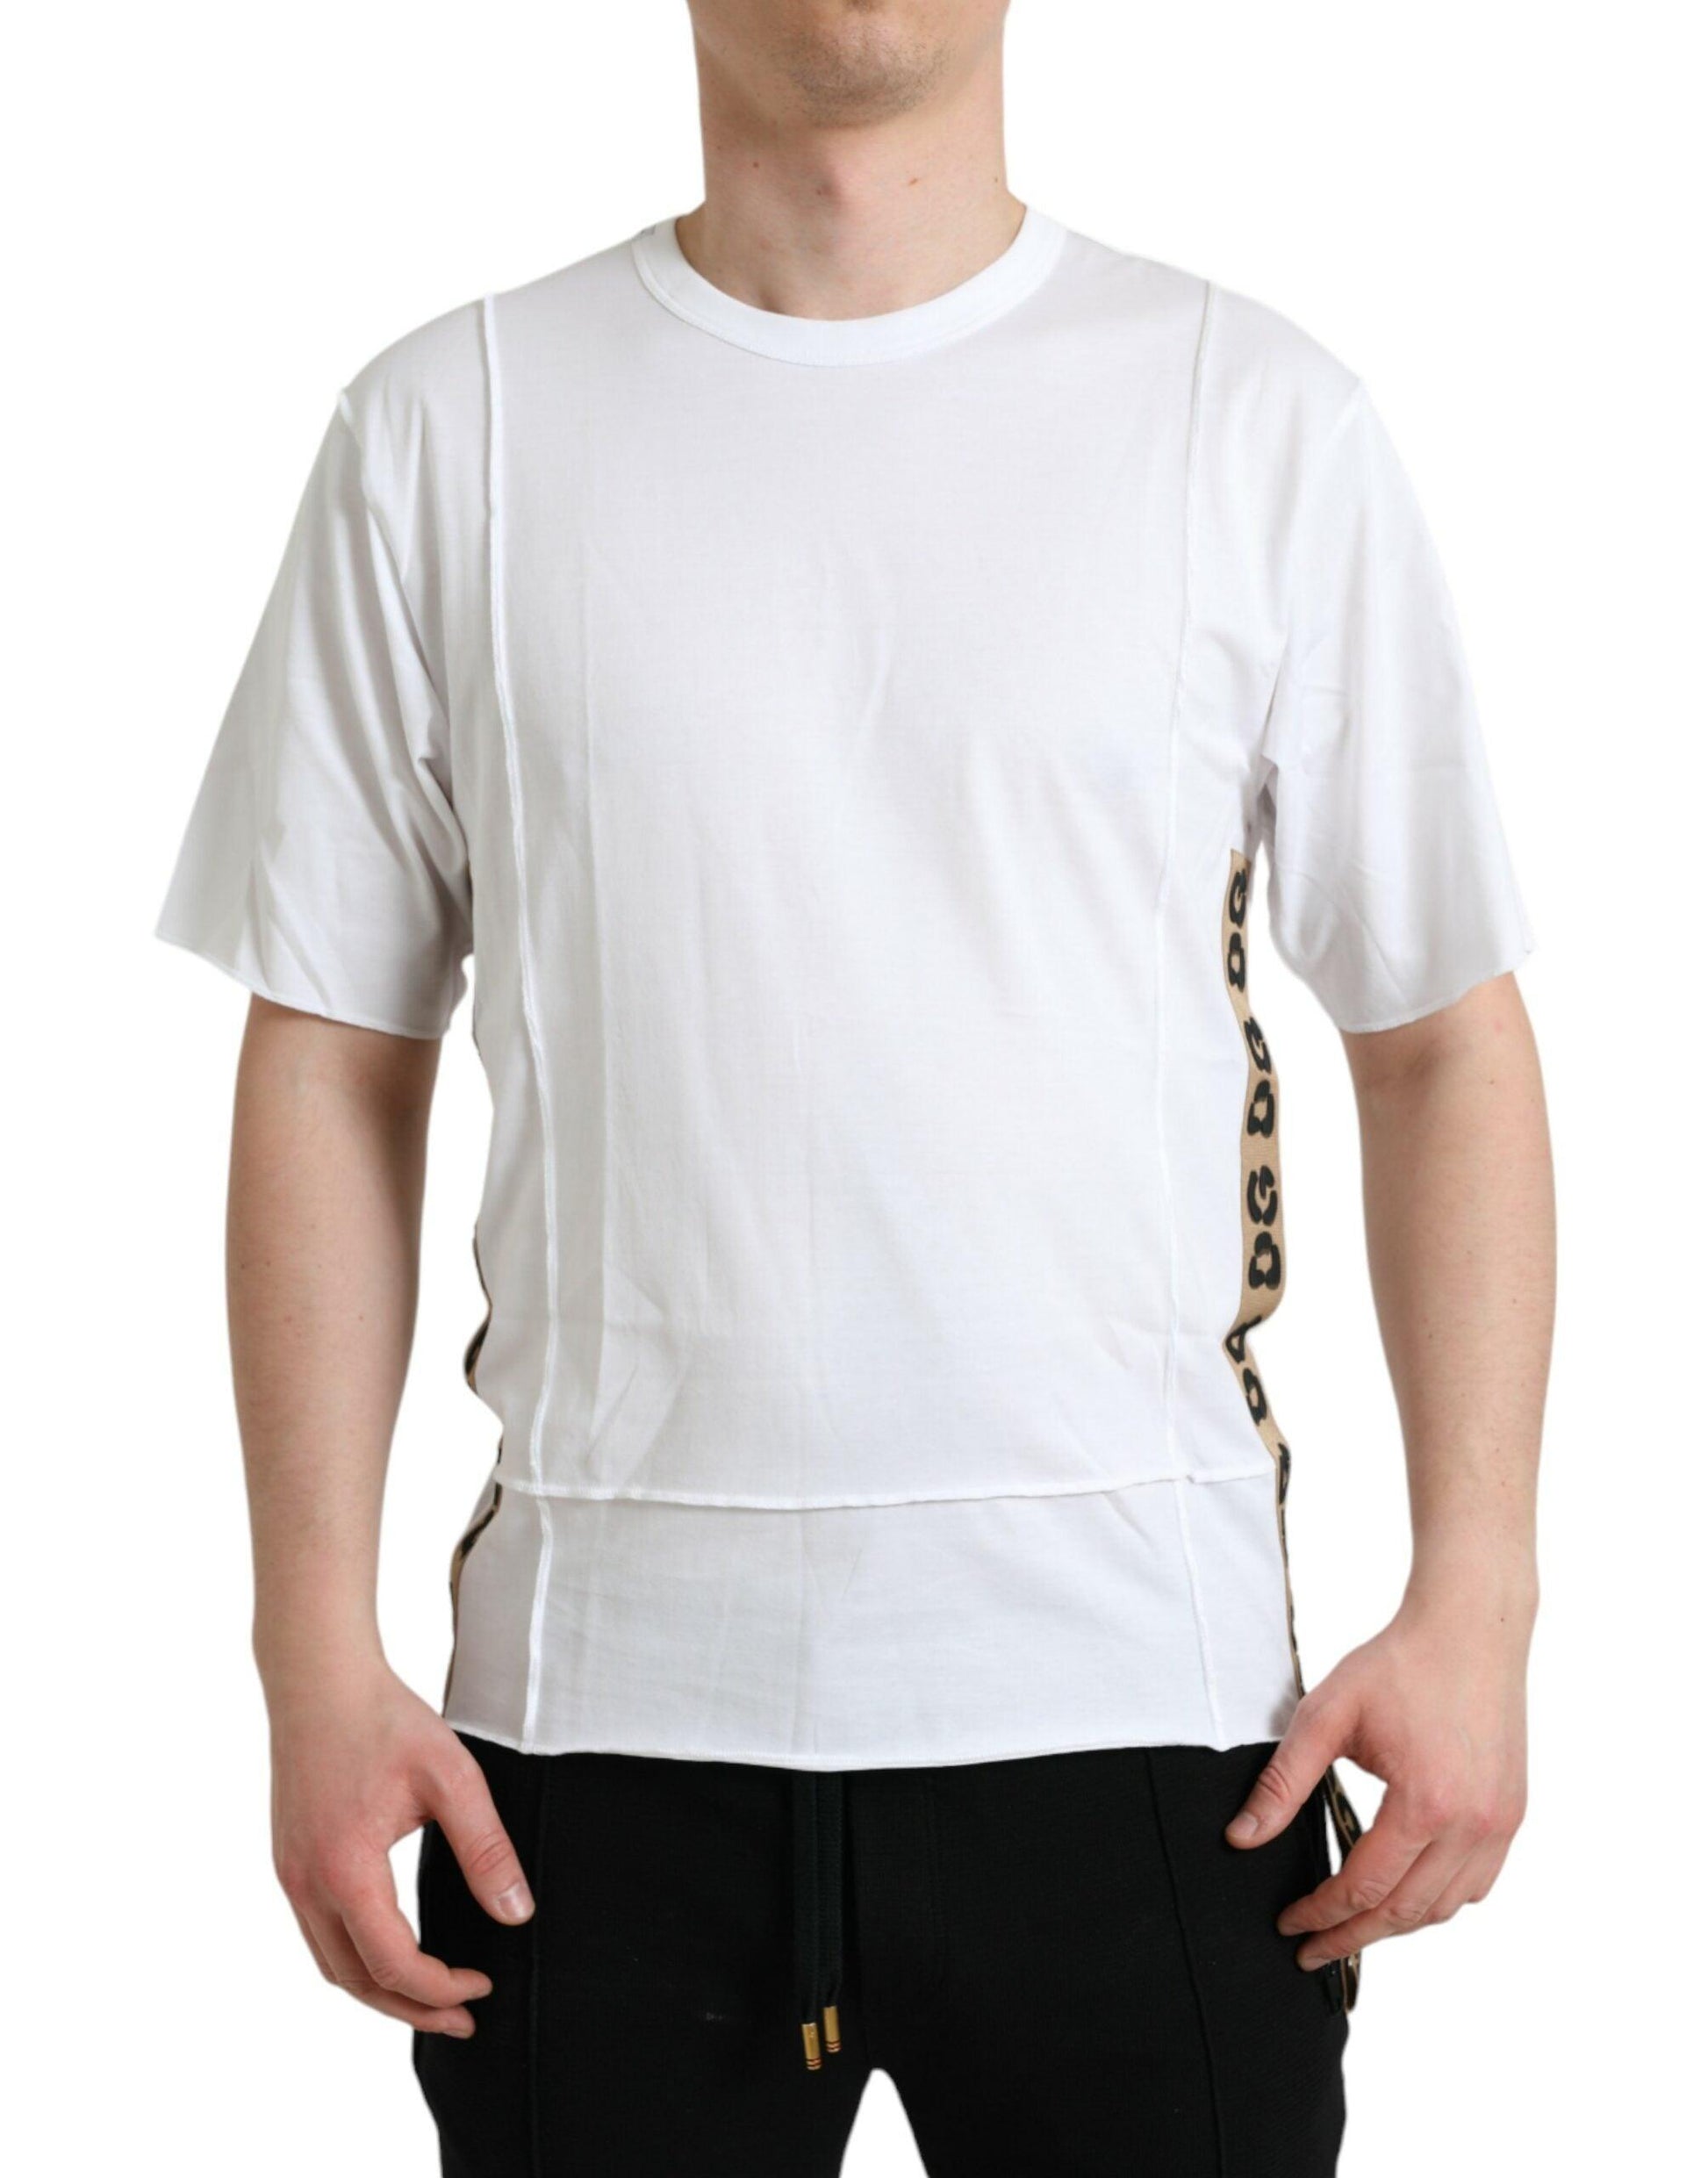 Dolce & Gabbana White Logo Crew Neck Short Sleeves T-shirt - PER.FASHION